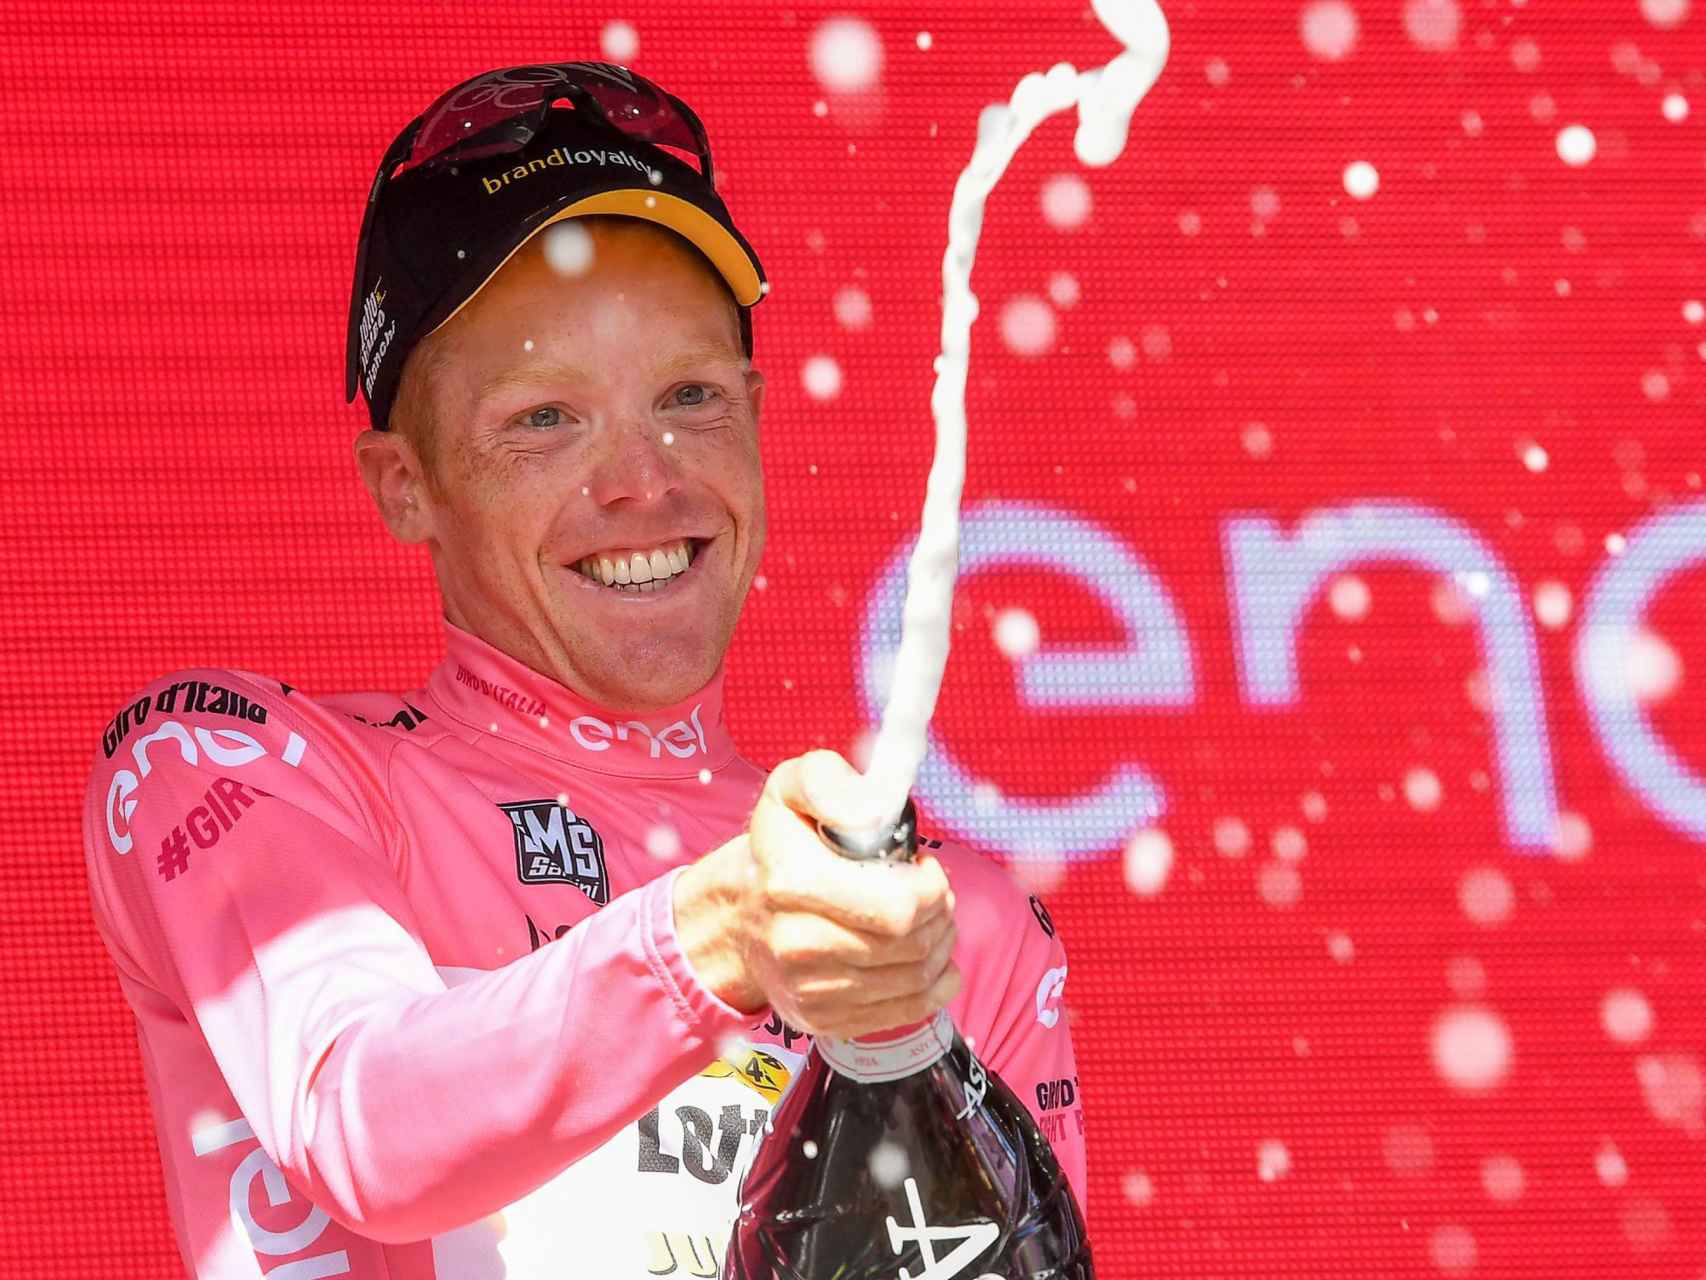 Kruijswijk celebra la maglia rosa en el podio del Giro.